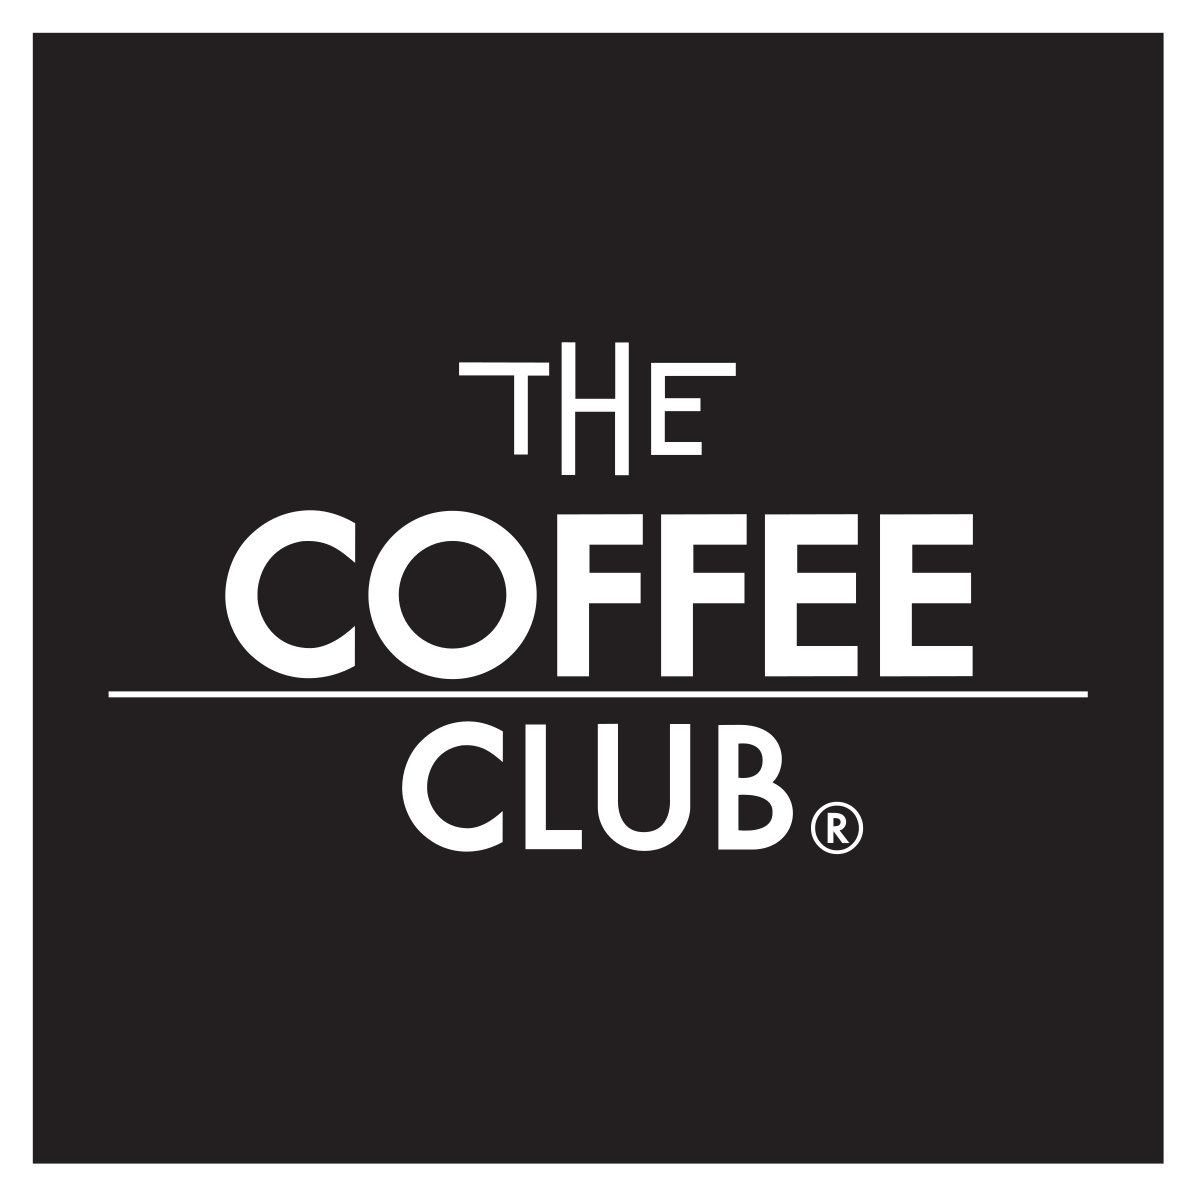 coffeeclub.com.au